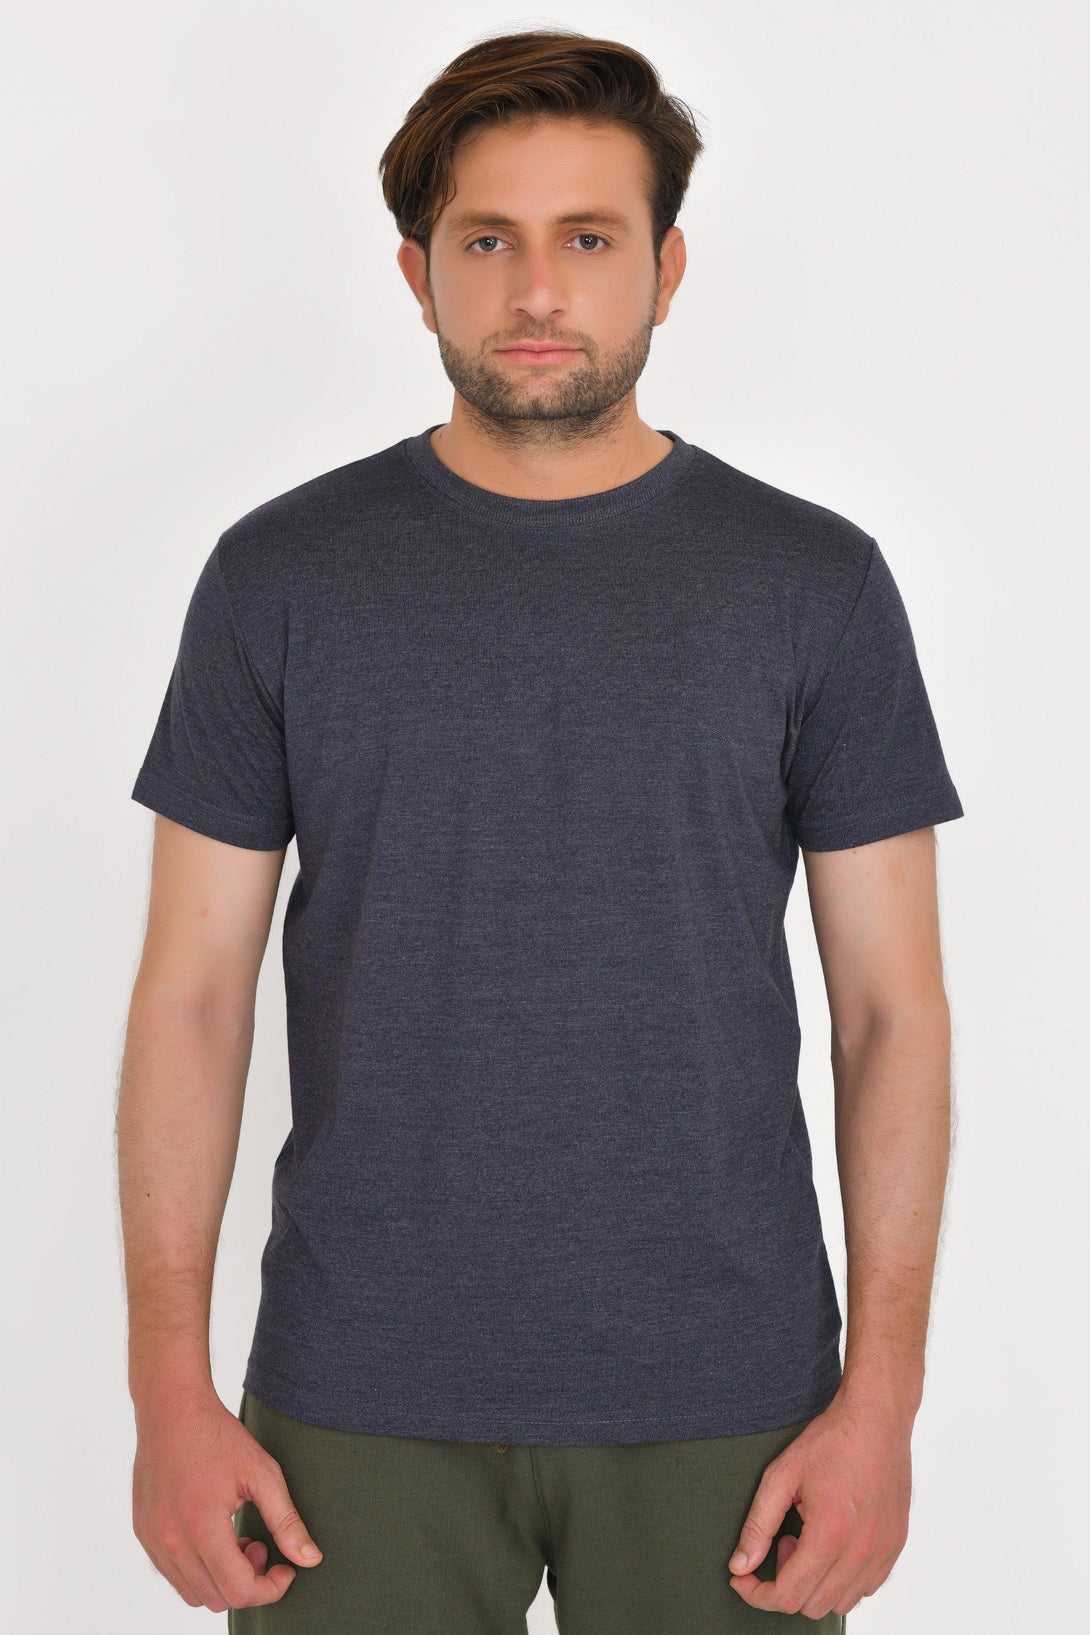 Round Neck T-Shirts | NAVY MELANGE - AQUA - HUNTER GREEN - Pack of 3 - FTS